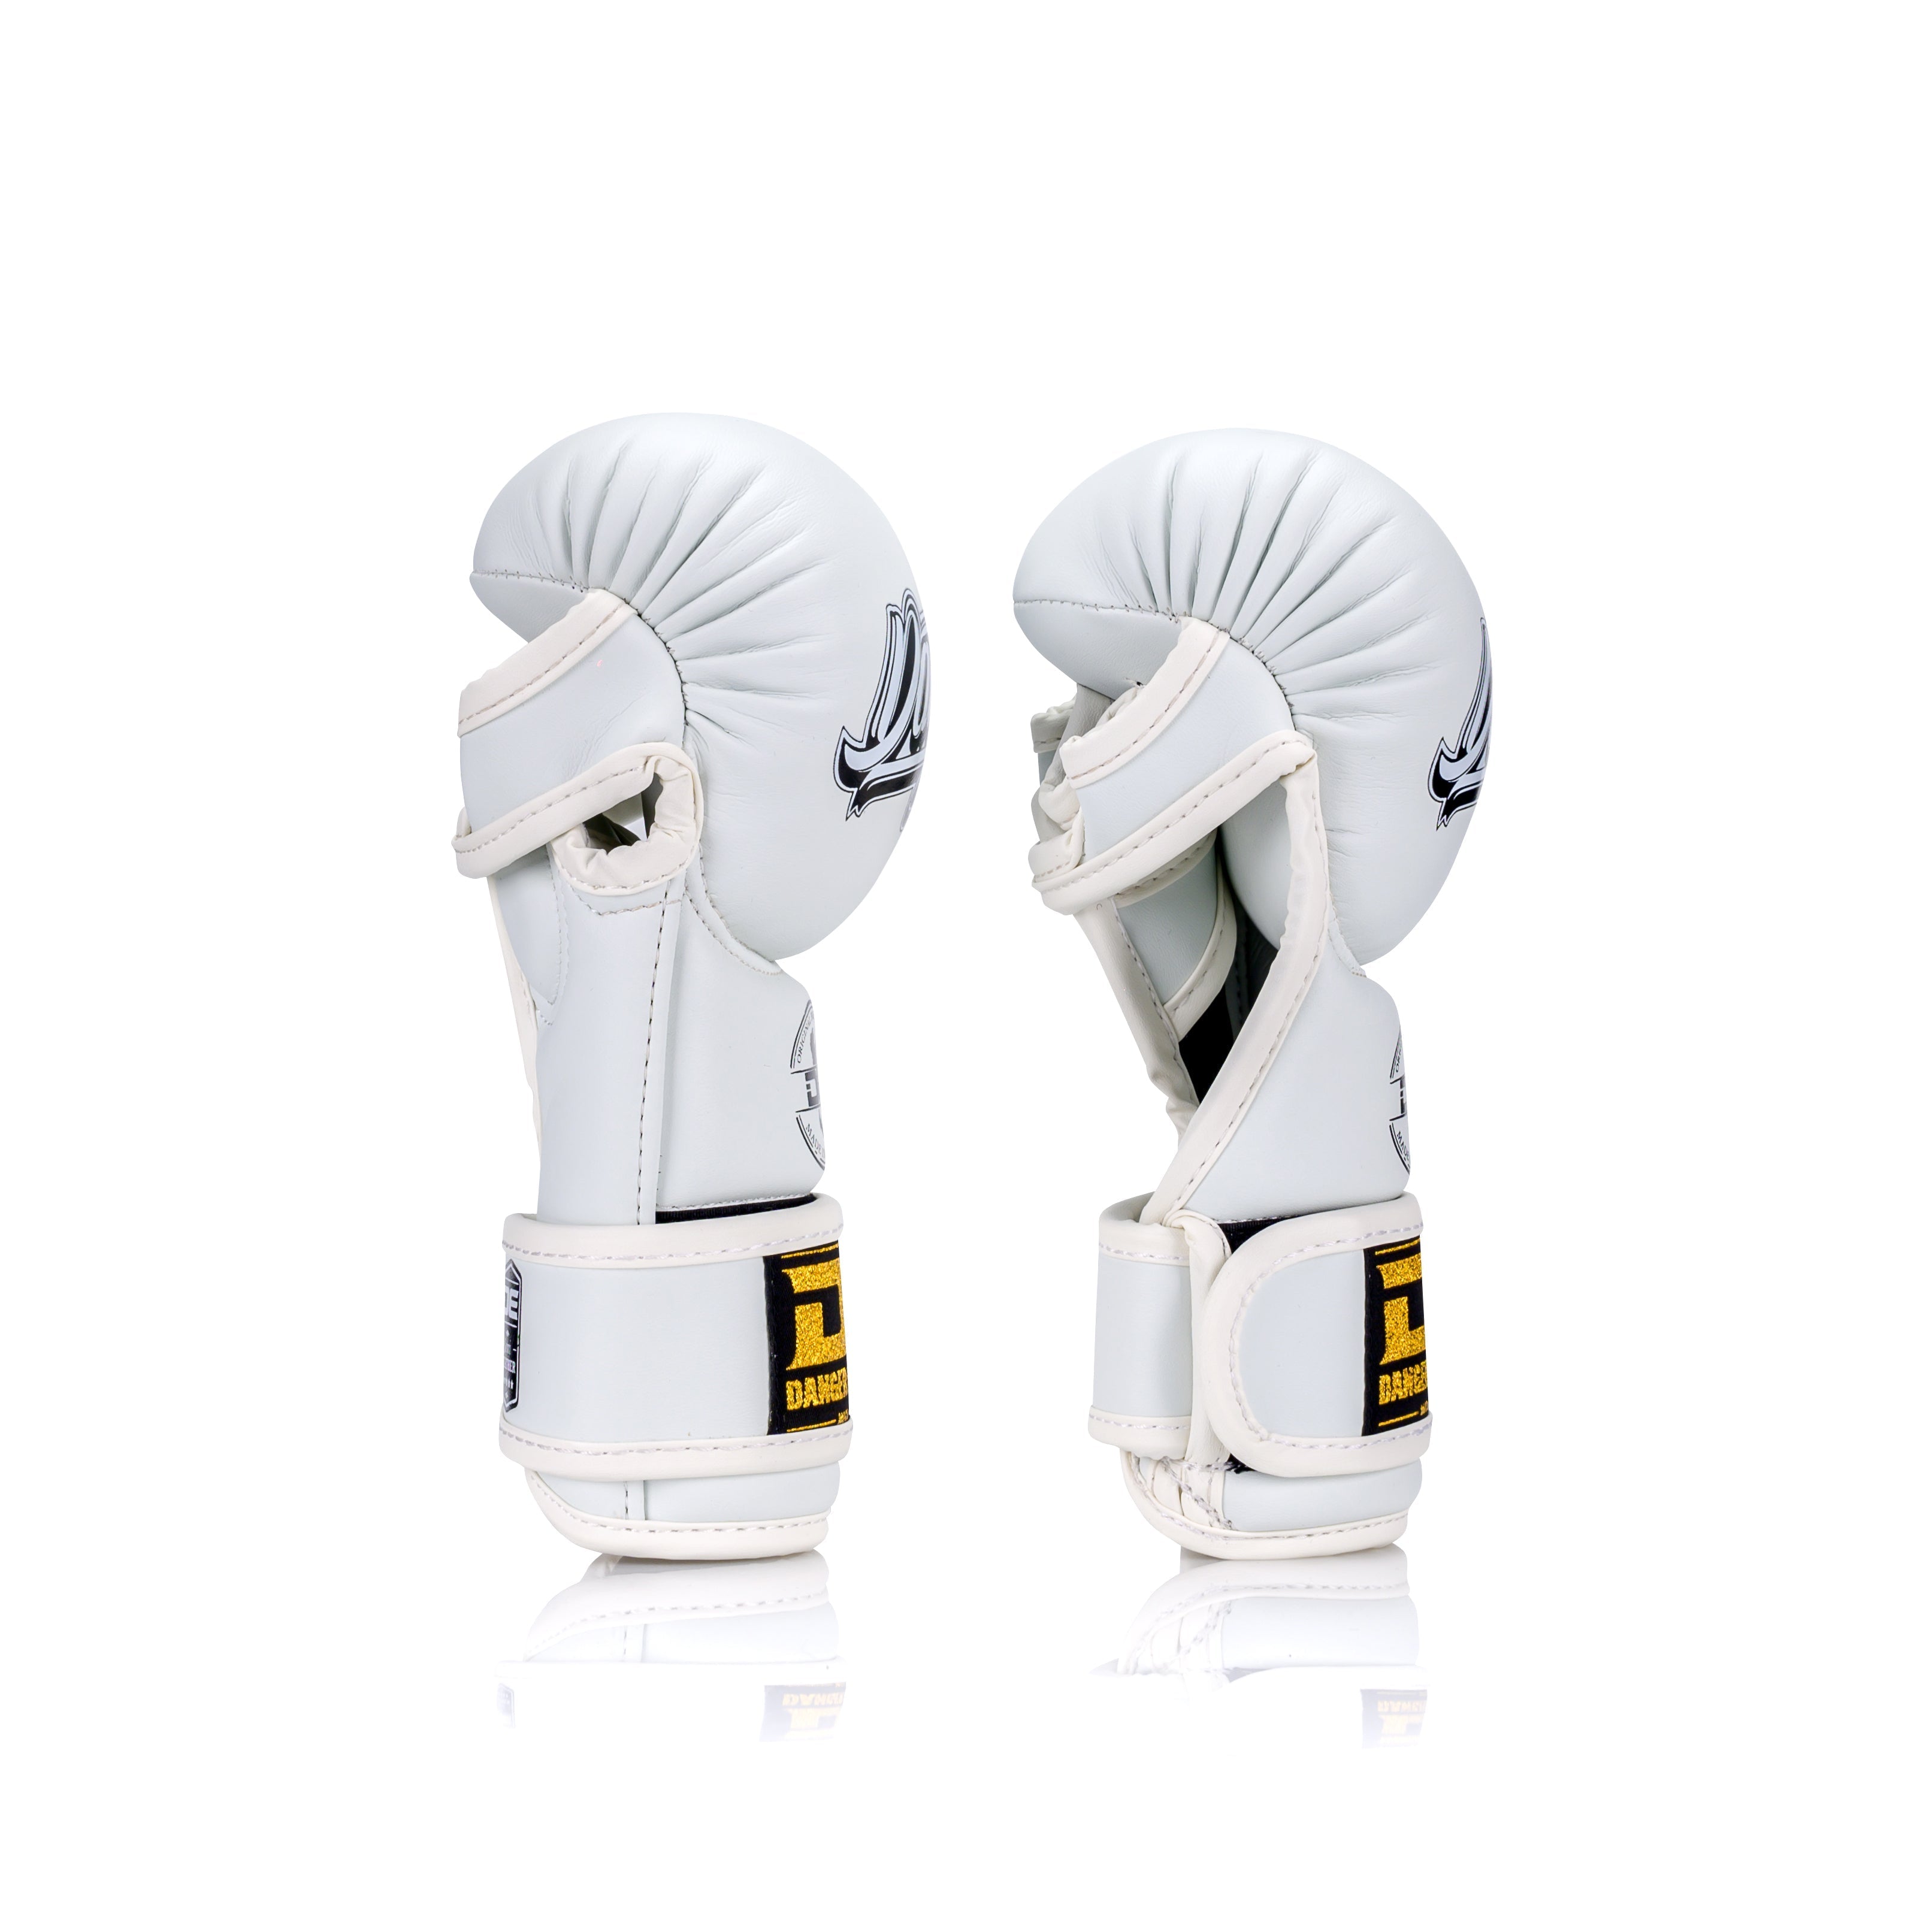 Grey Danger Equipment MMA Sparring Boxing Gloves Side